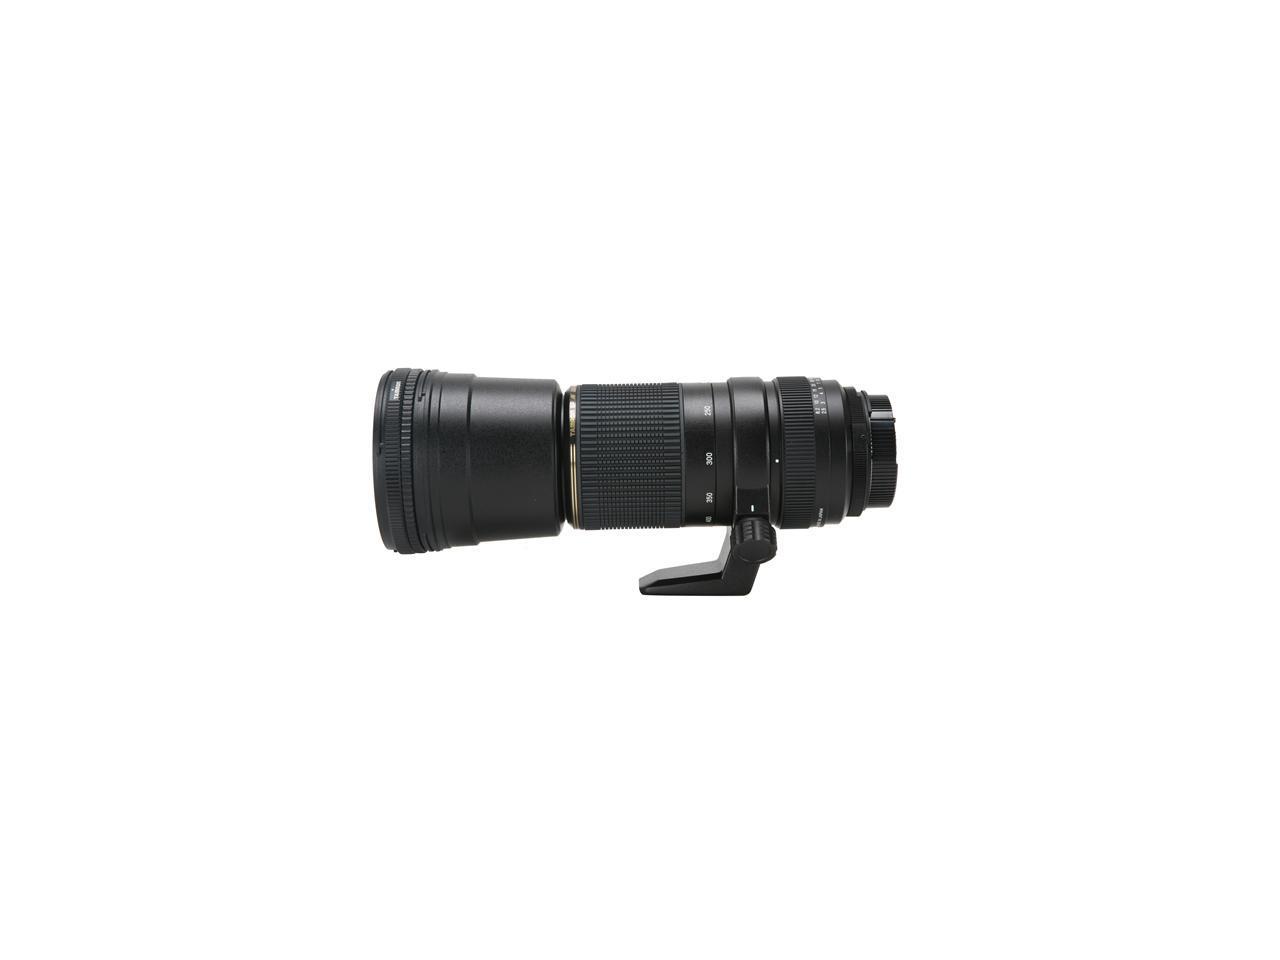 TAMRON SP AF 200-500mm F/5-6.3 Di LD (IF) Lens for Nikon - Newegg.com